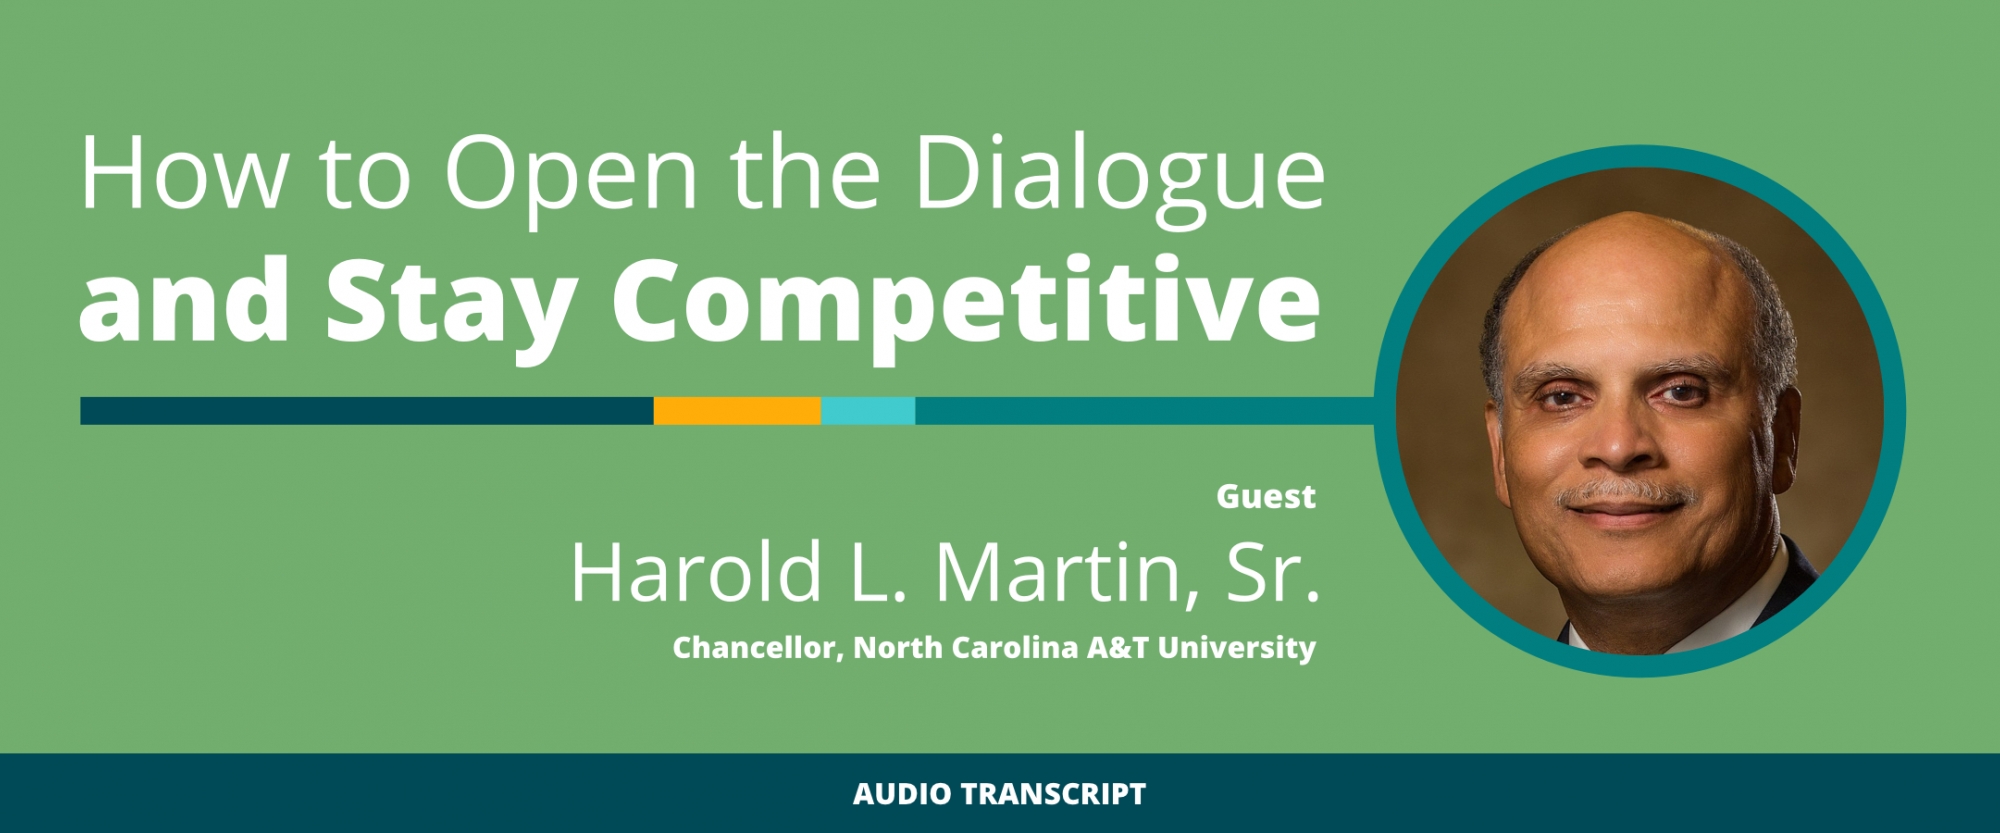 Weekly Wisdom Episode 10: Transcript of Conversation With Harold L. Martin, Sr., North Carolina A&T University Chancellor